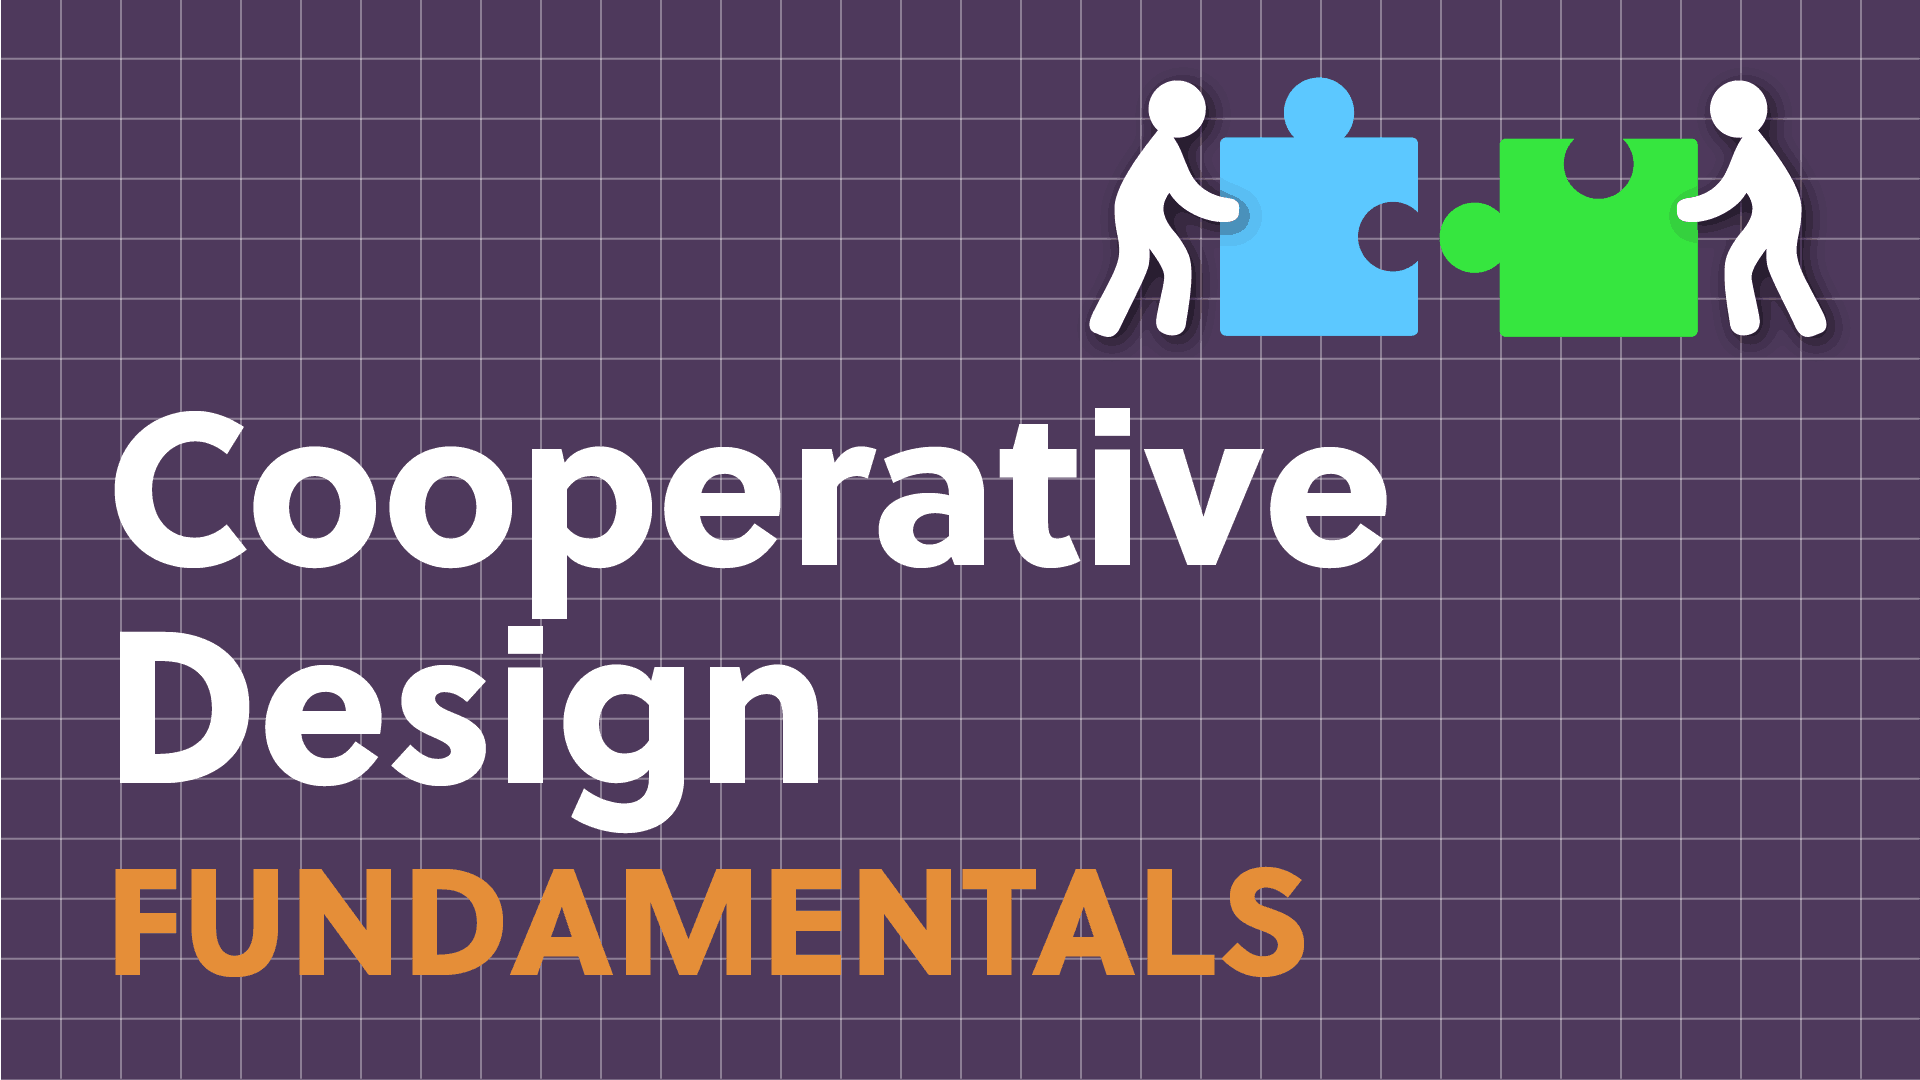 cooperative design fundamentals